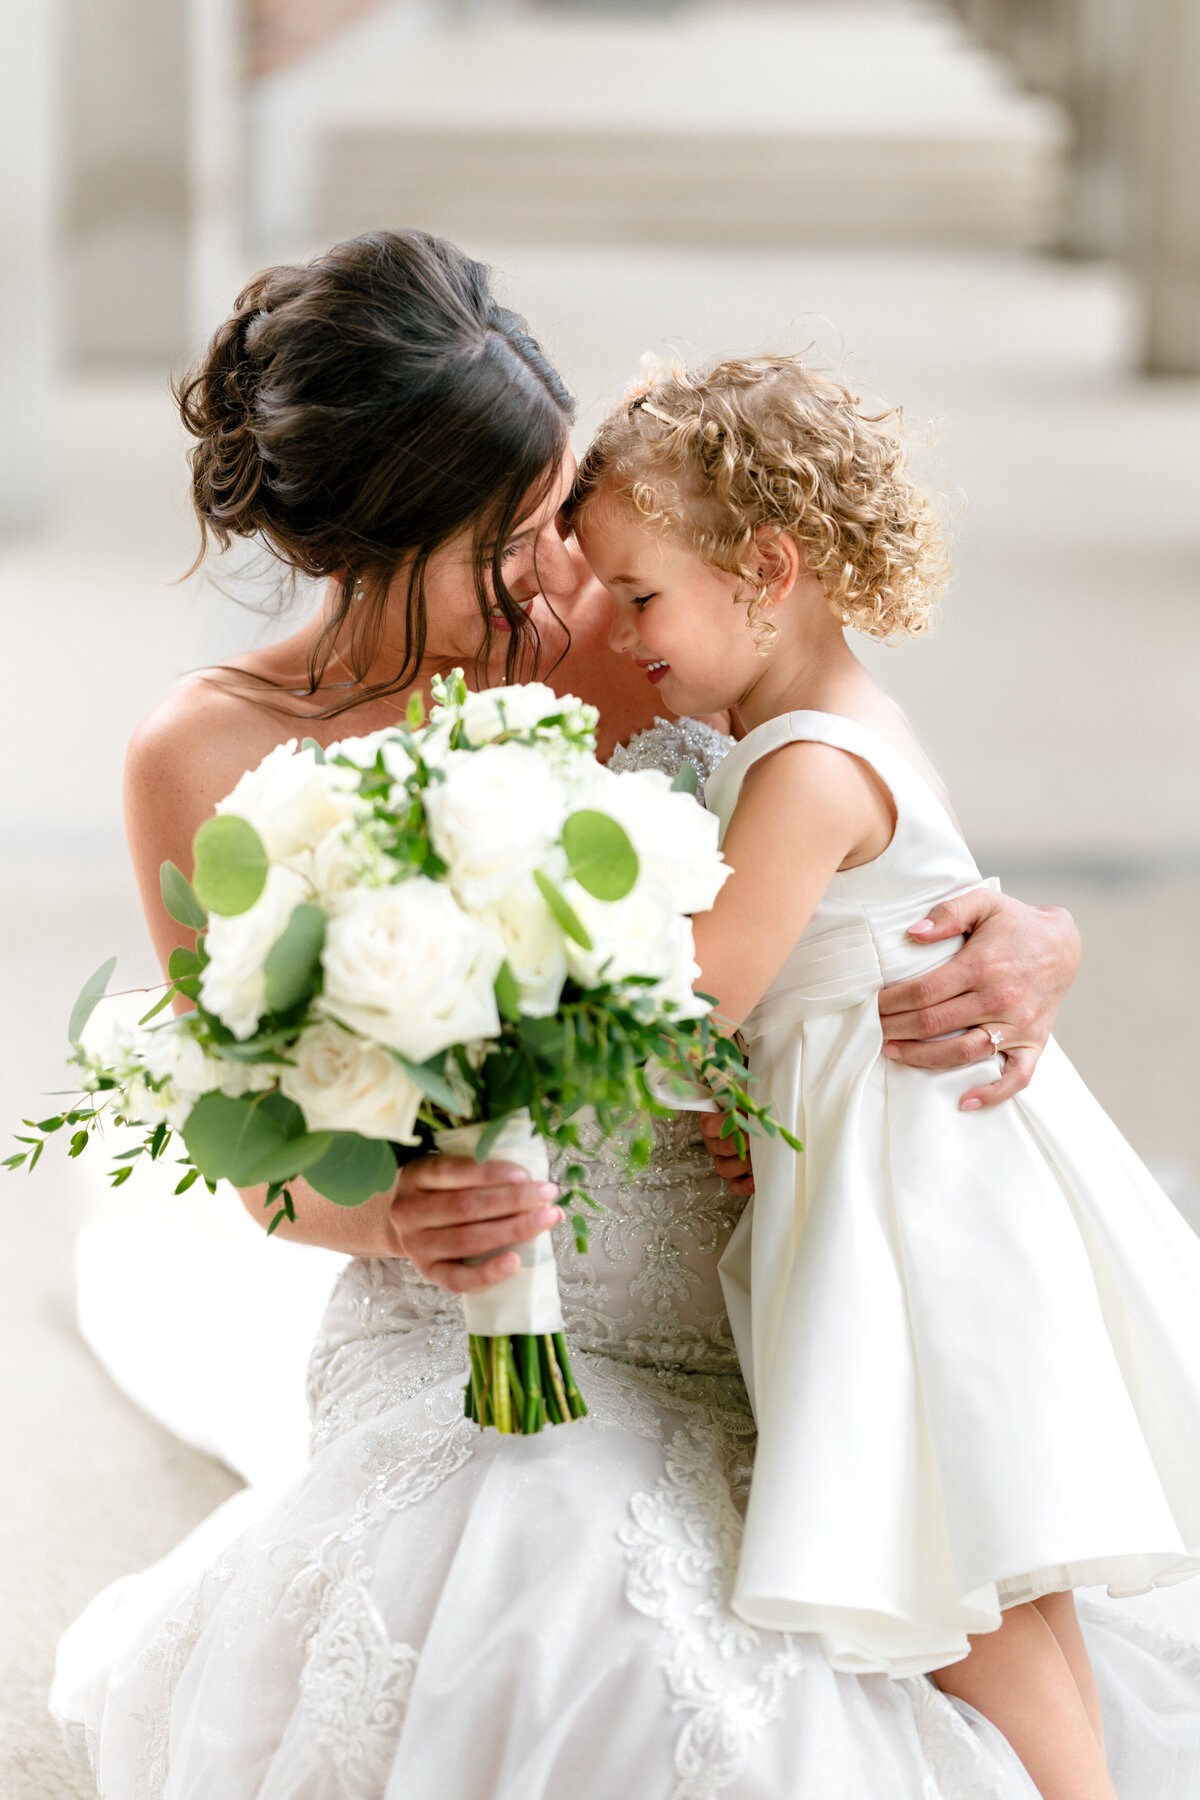 Aspen-Avenue-Chicago-Wedding-Photographer-Classy-Modern-Grand-Joliet-Mansion-Flower-Girl-Bride-Hugging-Candid